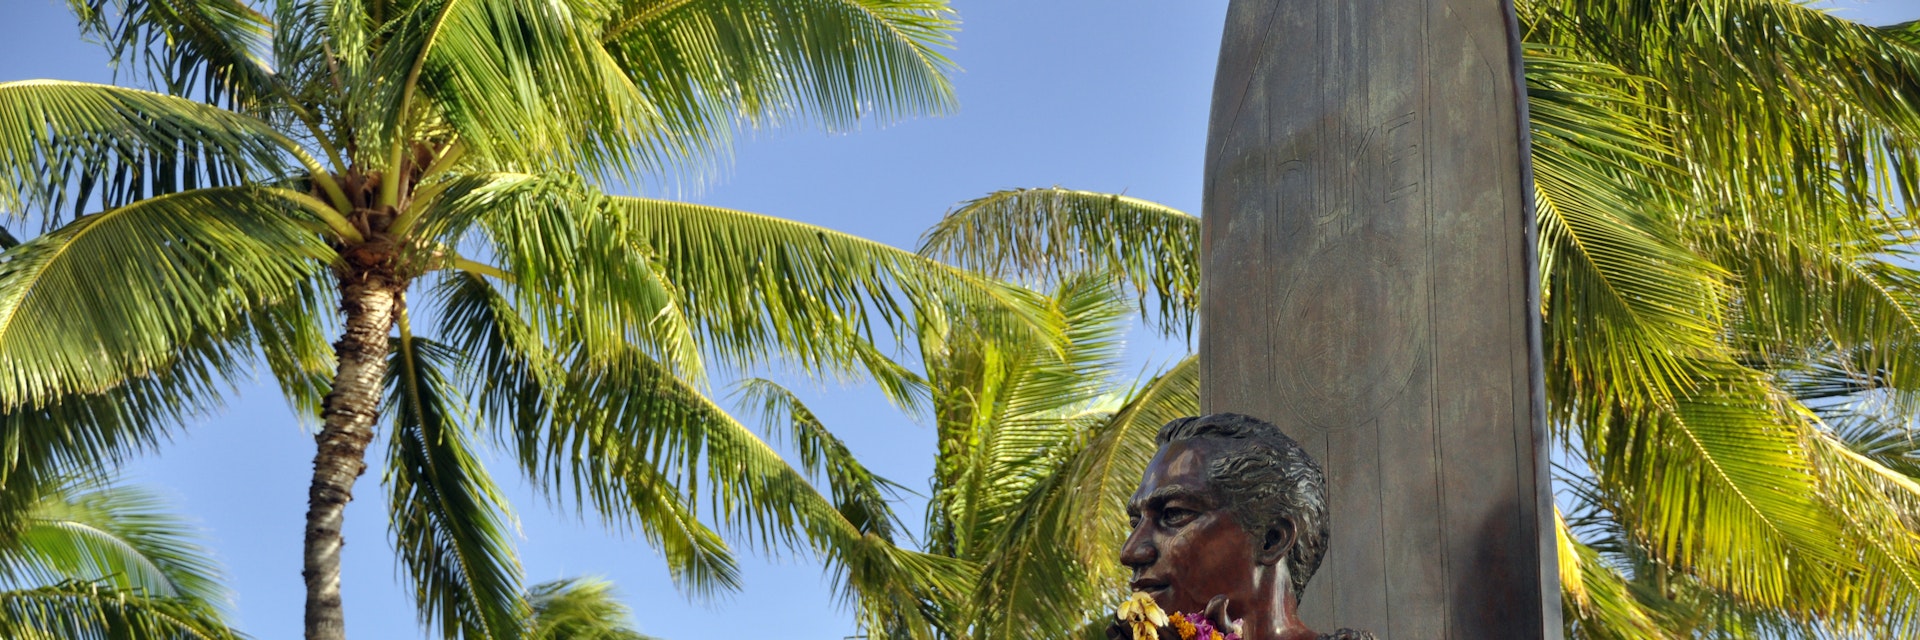 Duke Kahanamoku Statue in Waikiki Beach, Honolulu, Hawaii
